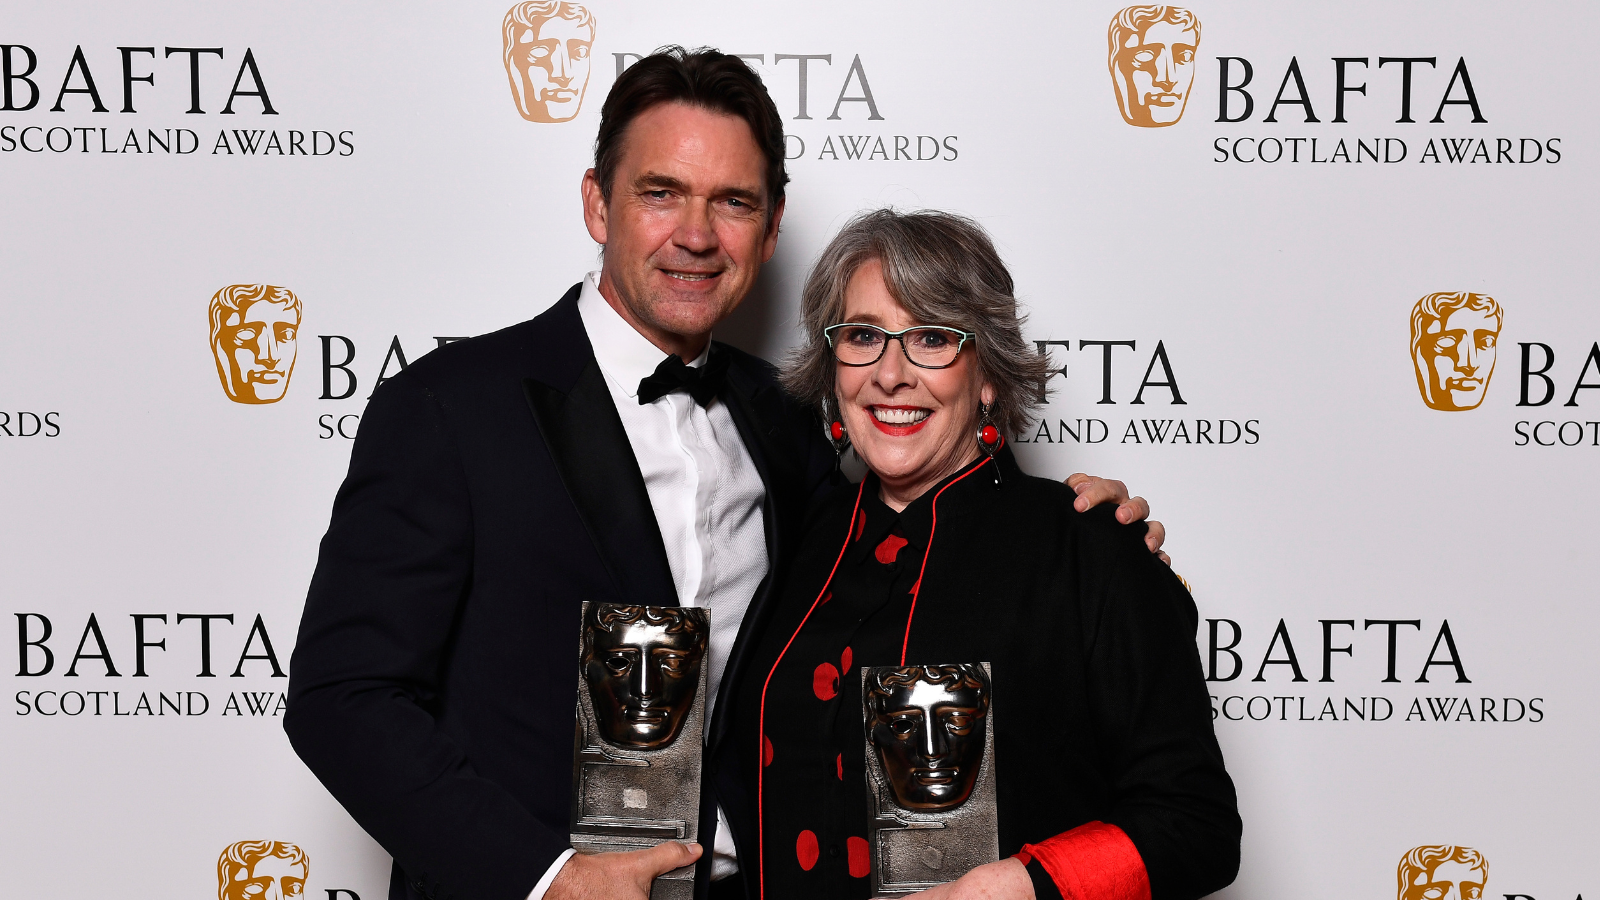 BAFTA Game Awards 2022 Winners Announced